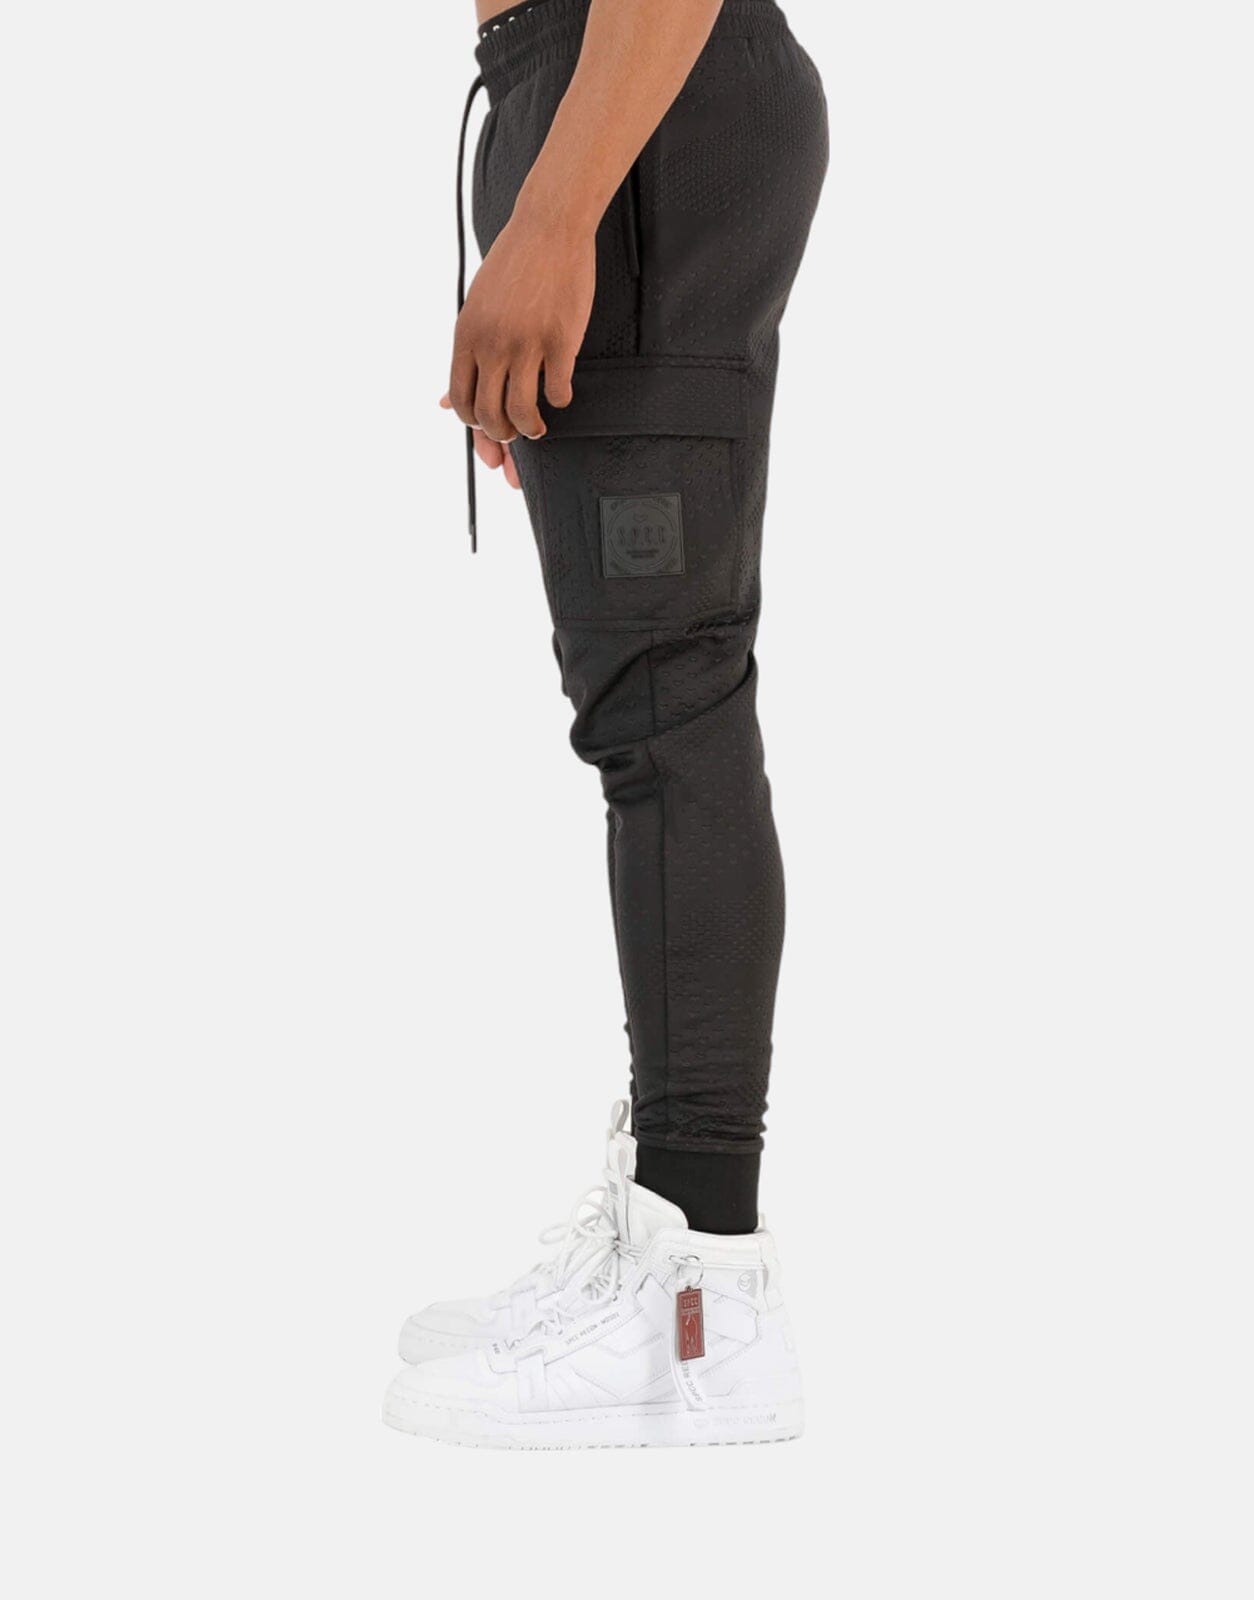 SPCC Spectra Black Sweatpants - Subwear